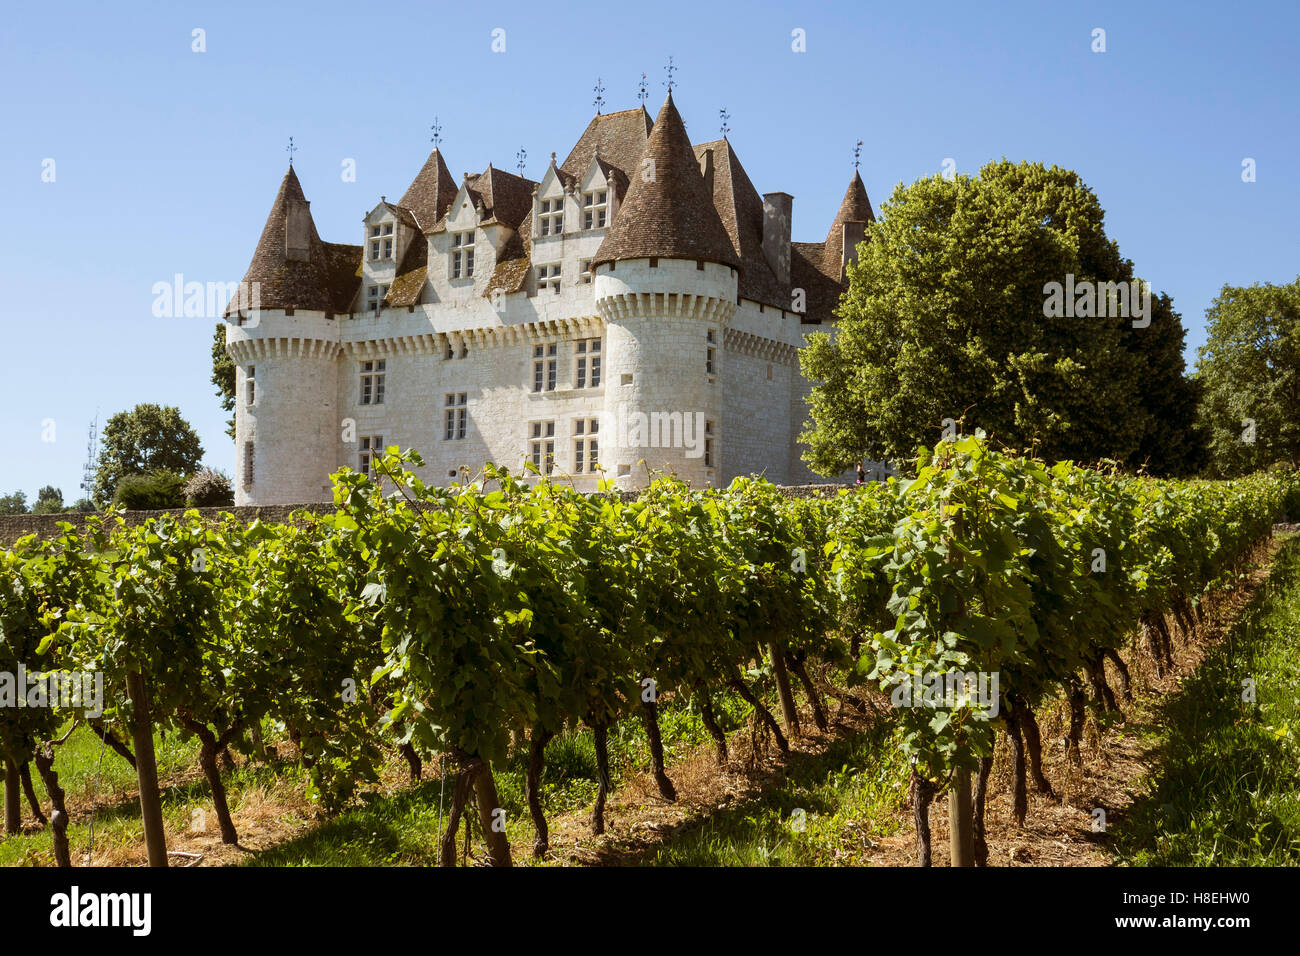 Chateau and Vineyard, Montbazillac, Dordogne, France, Europe Stock Photo